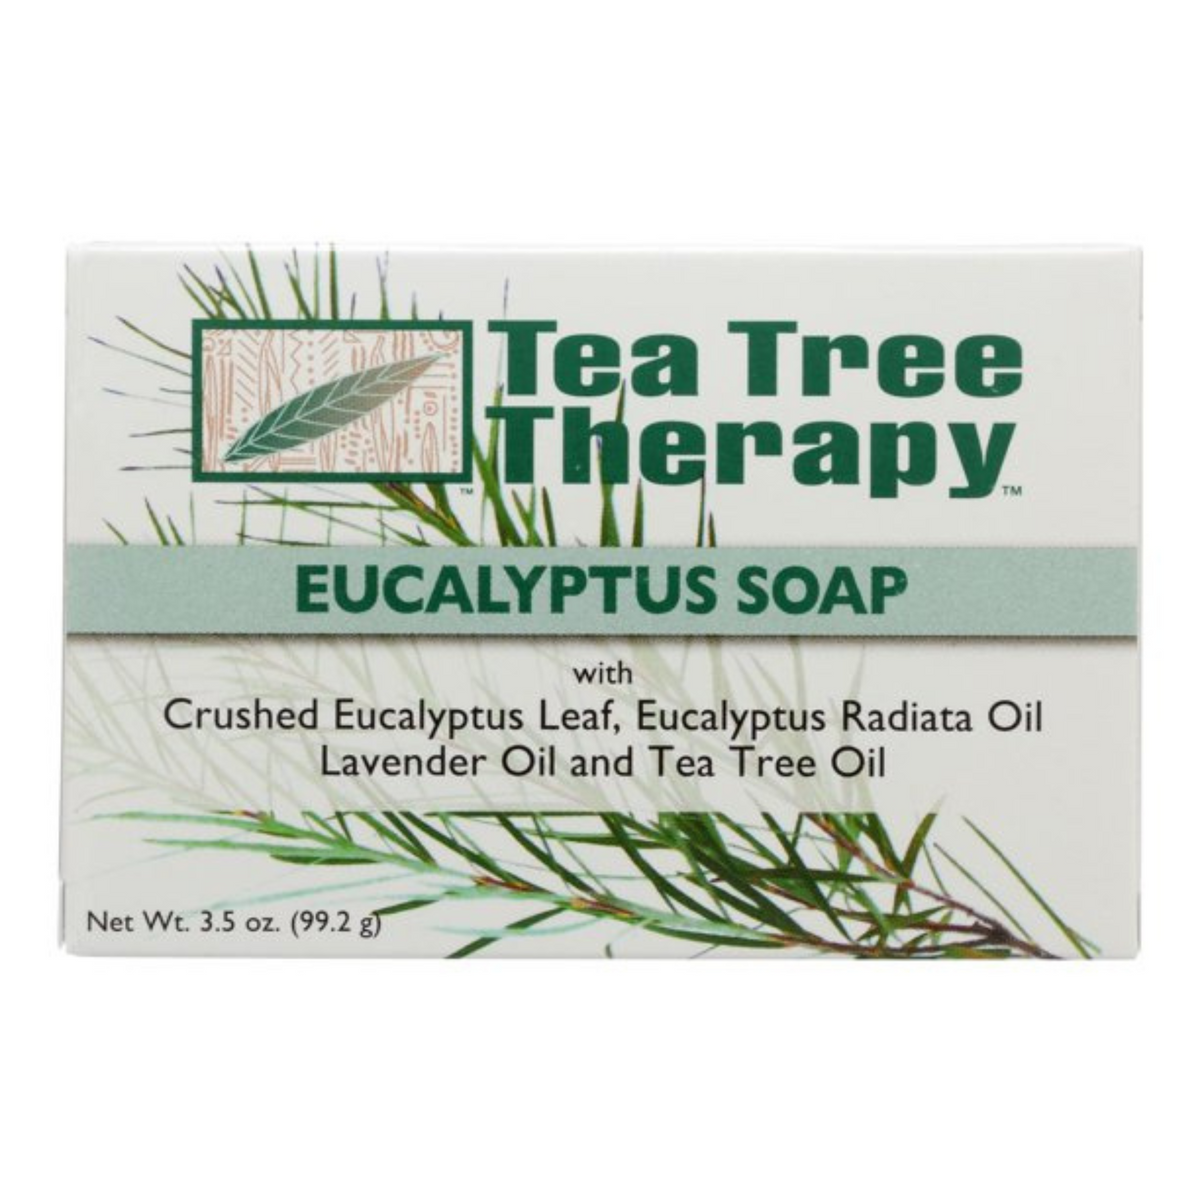 Primary Image of Tea Tree Therapy Eucalyptus Soap (3.5 oz) 